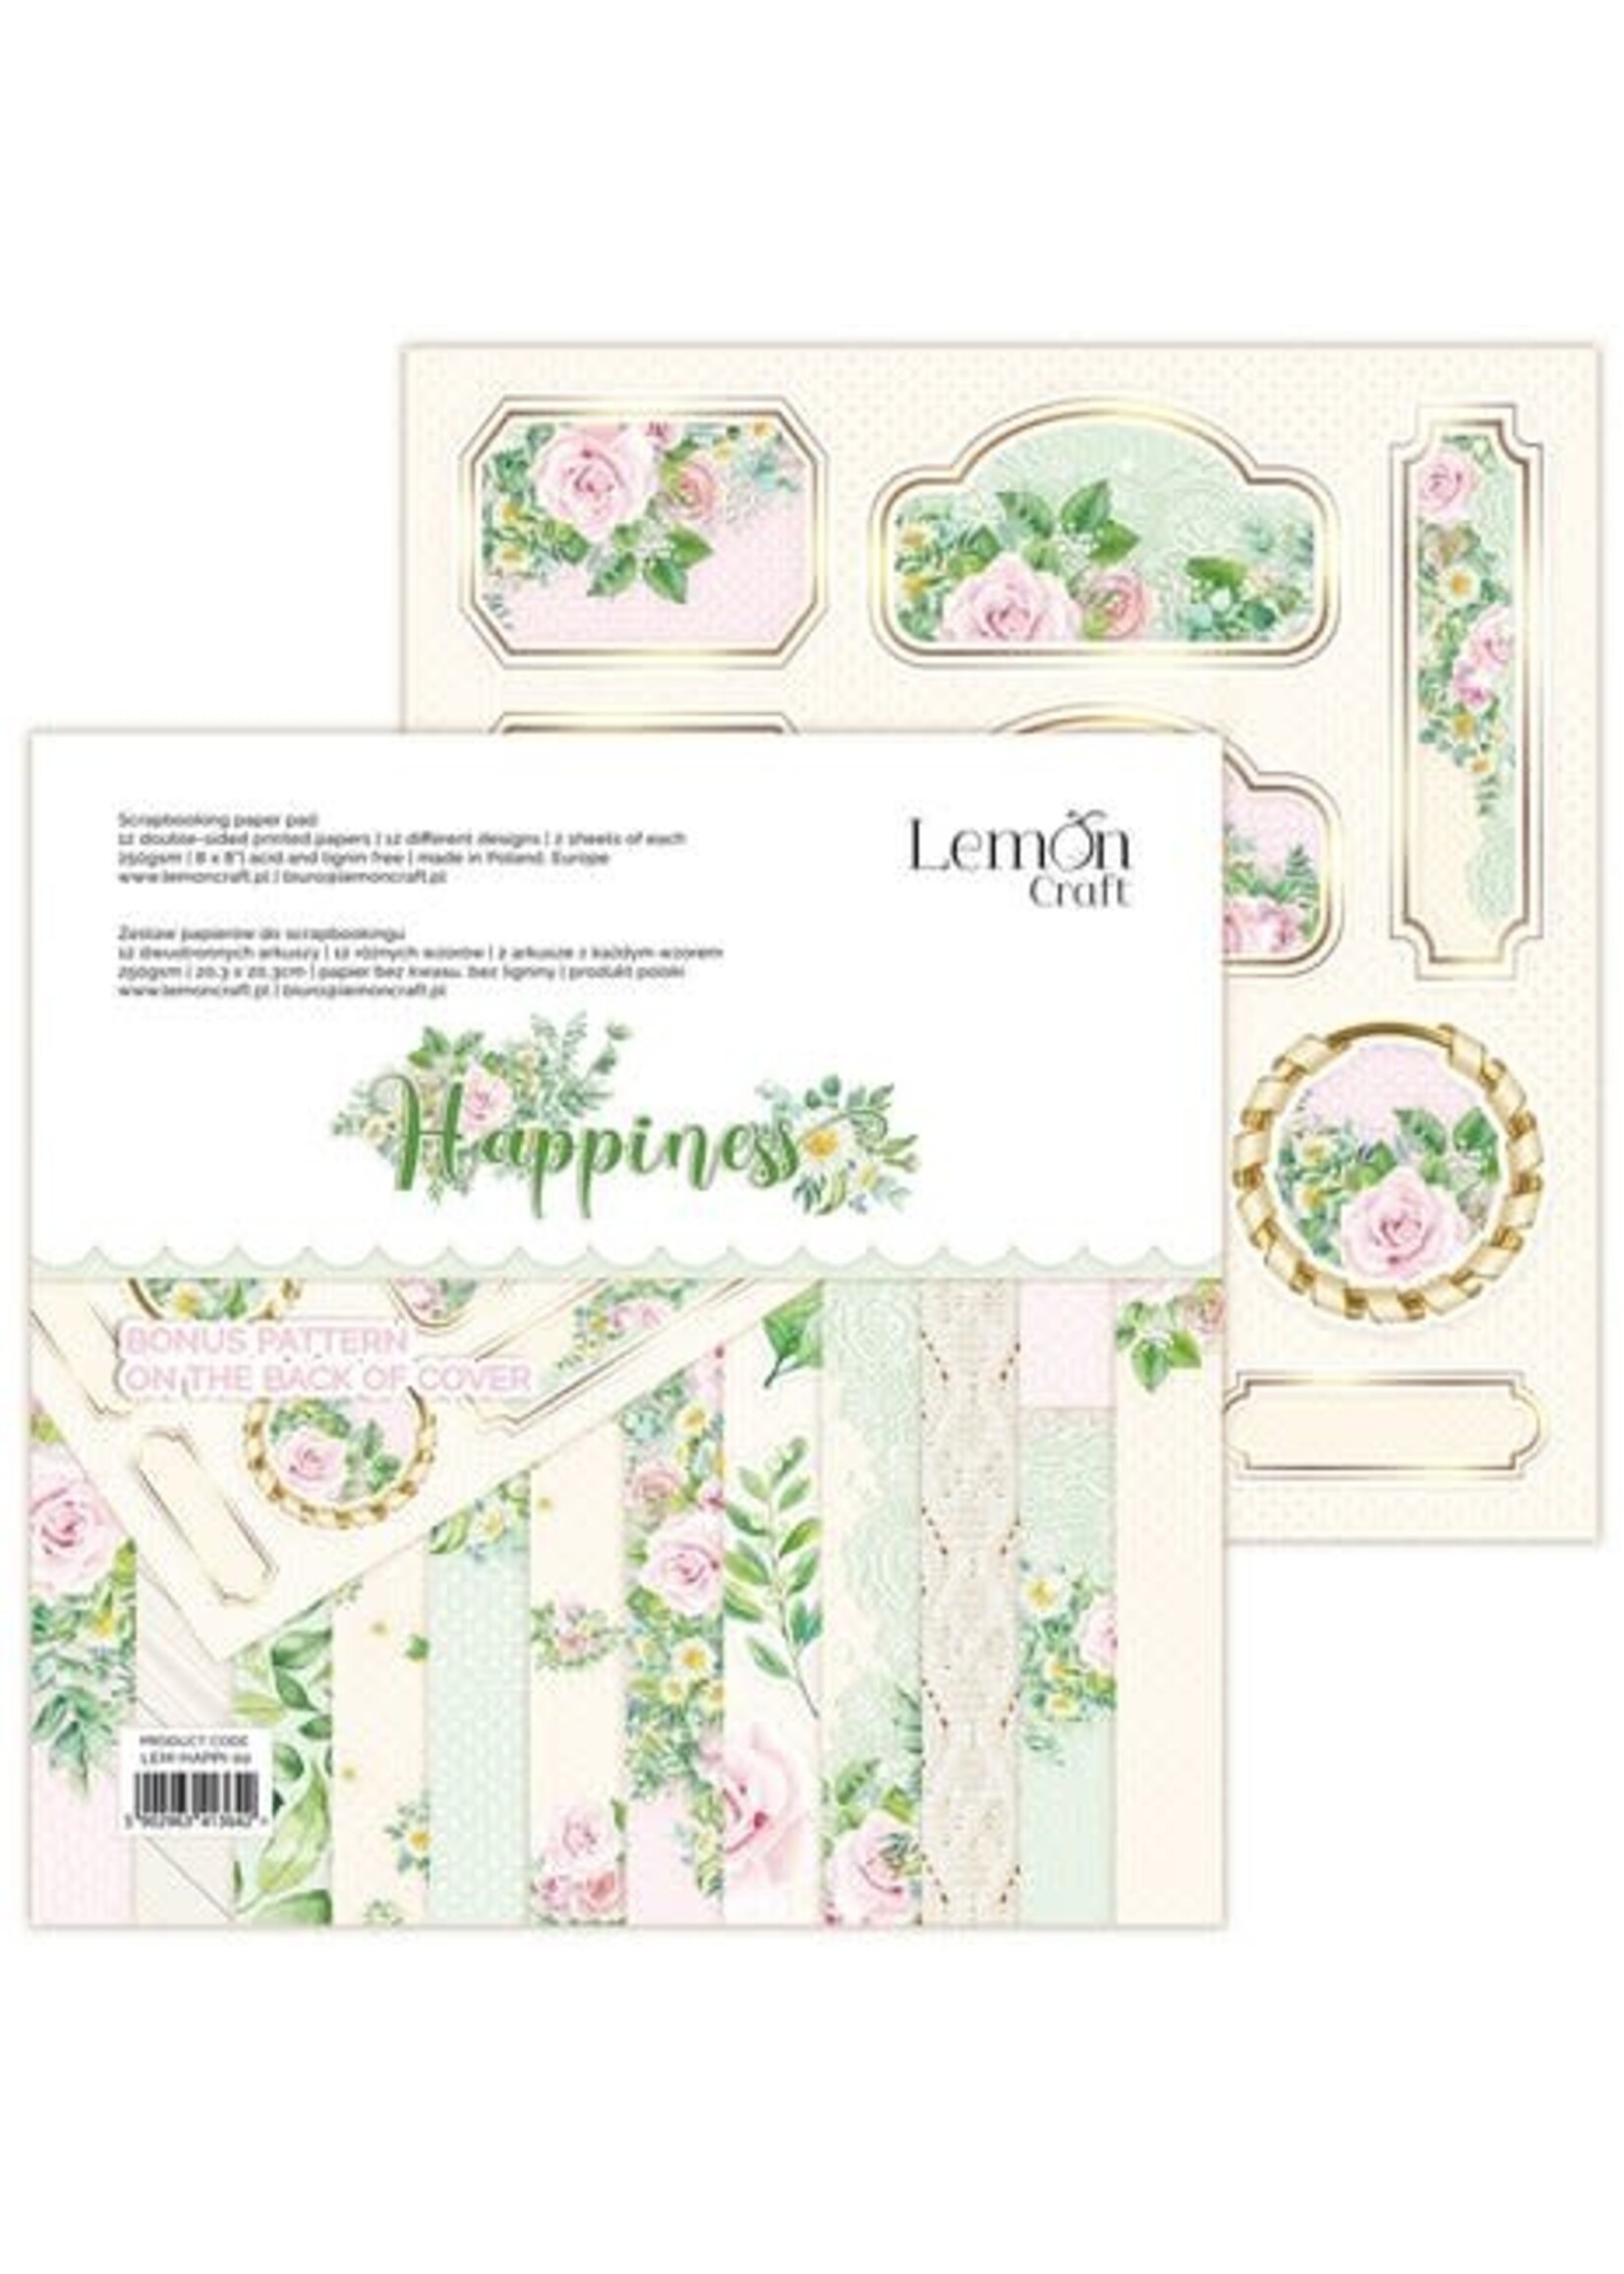 Lemon Craft Happiness 8x8 Inch Paper Pad (LEM-HAPPI-02)